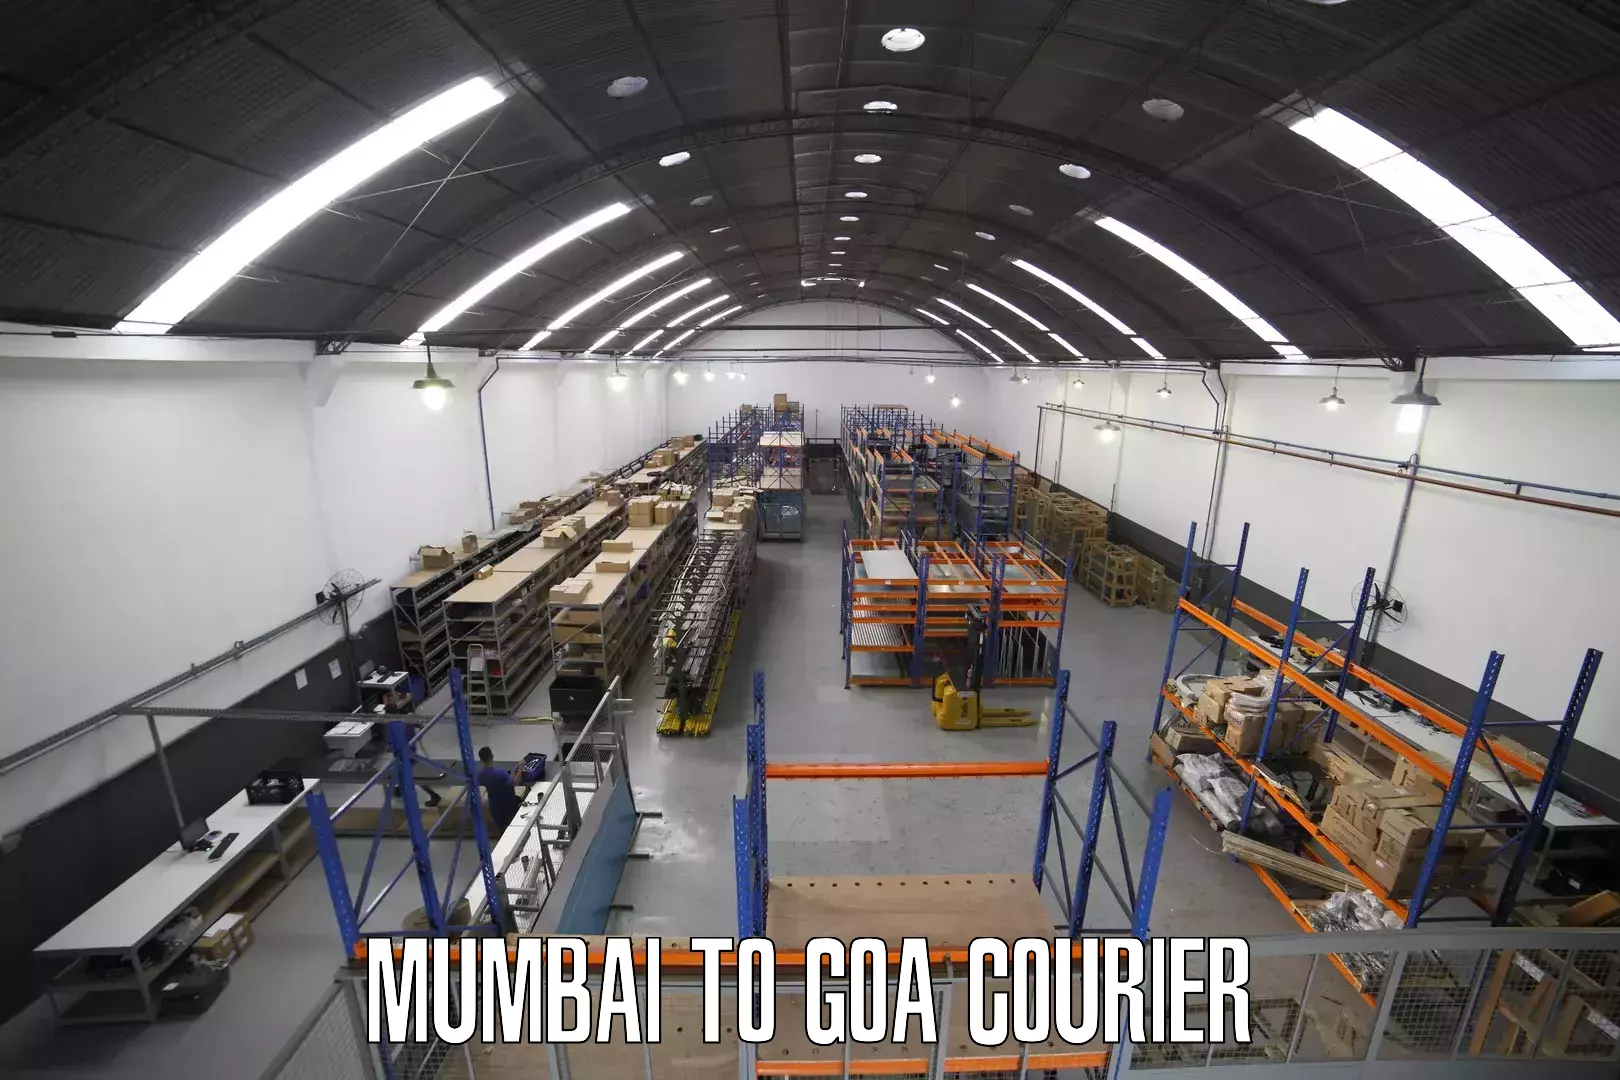 Courier service comparison Mumbai to IIT Goa